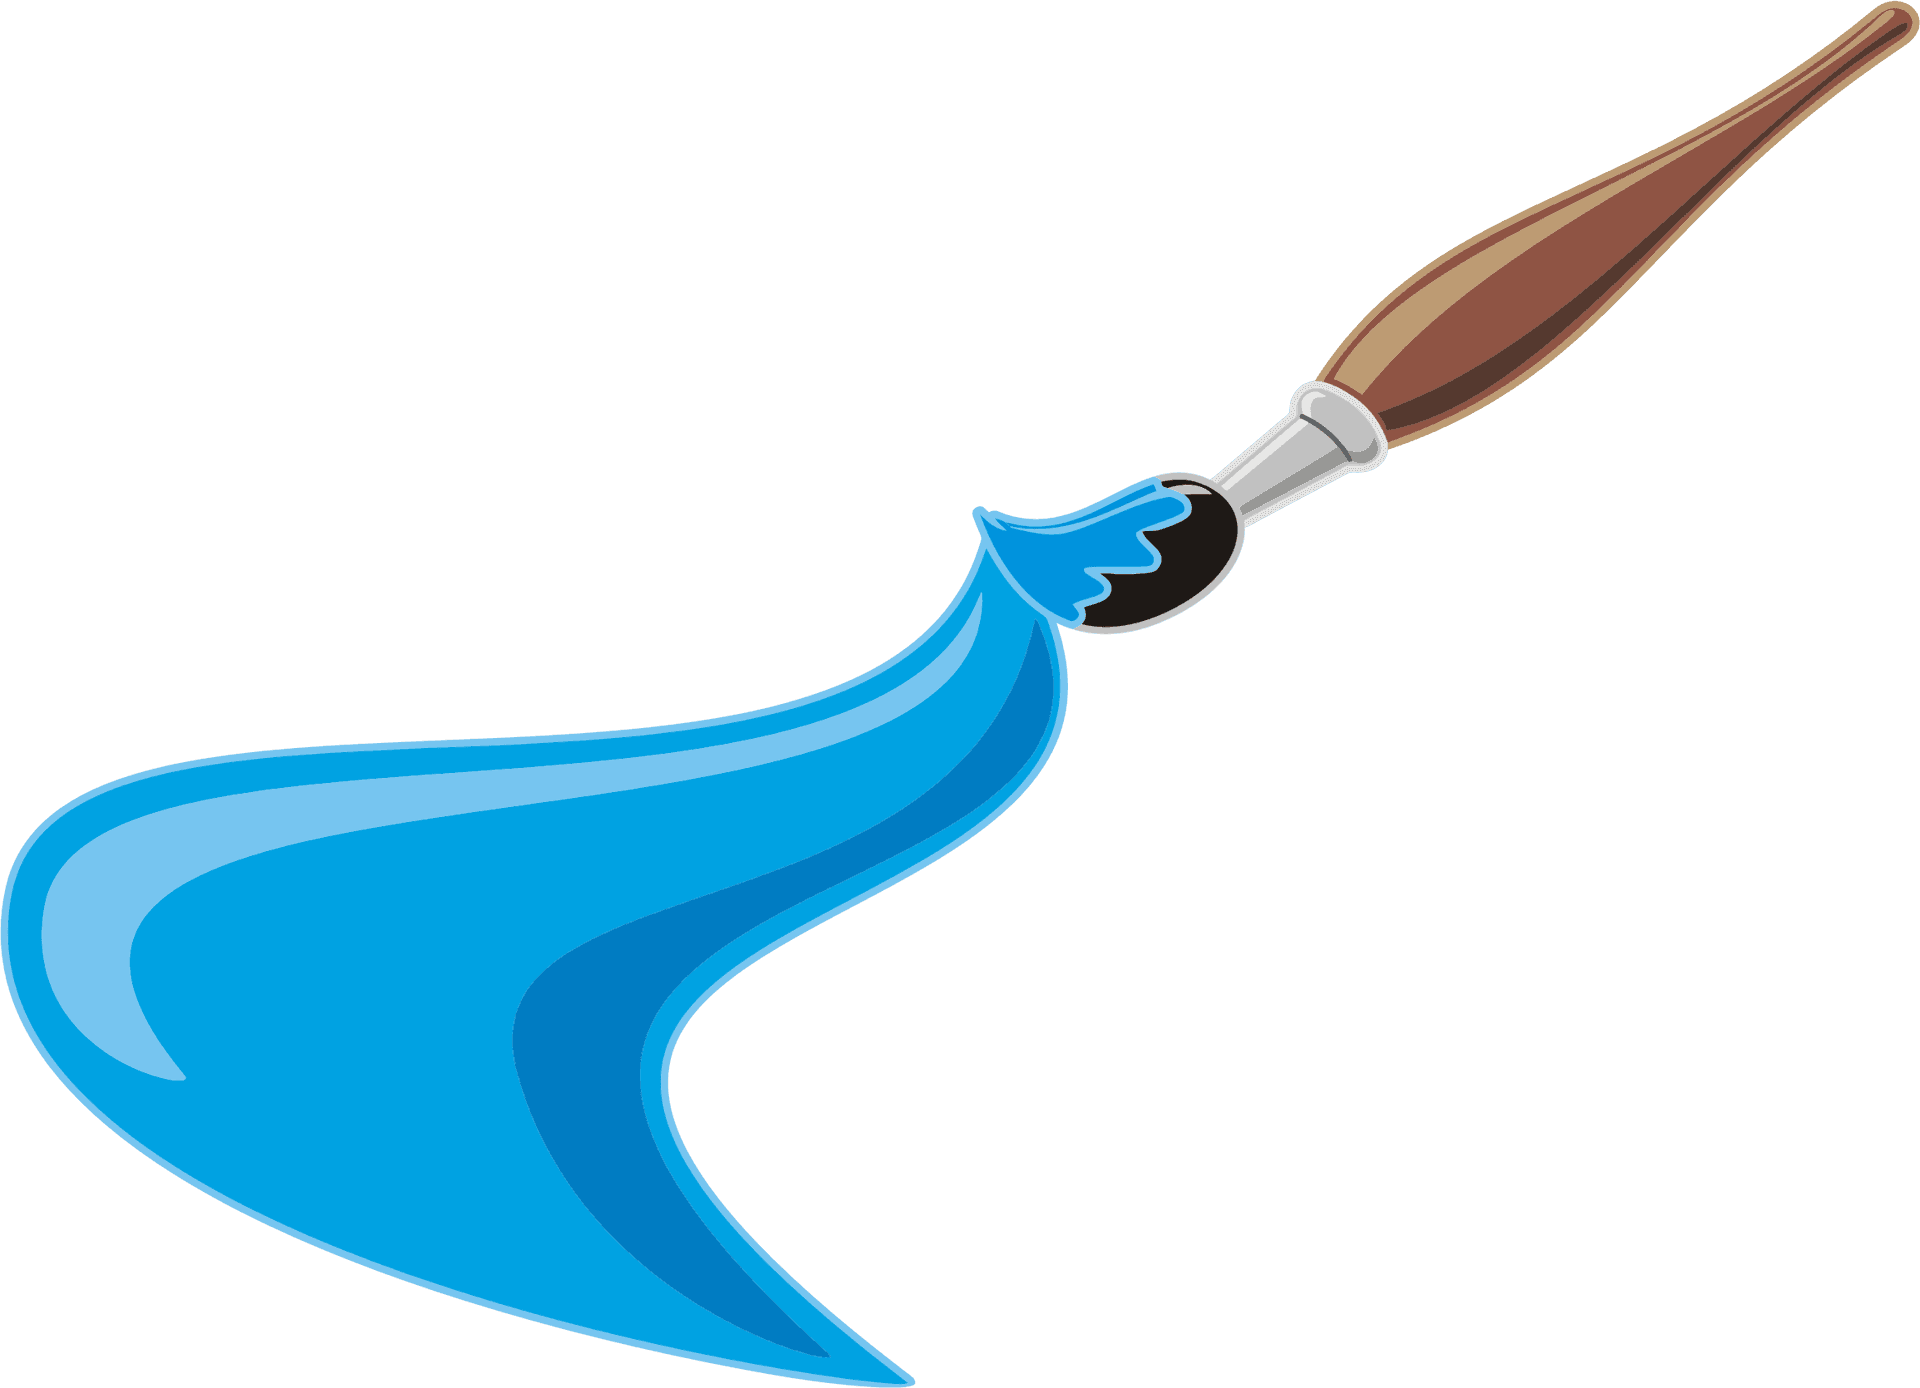 Paintbrush Stroke Vector Art PNG image